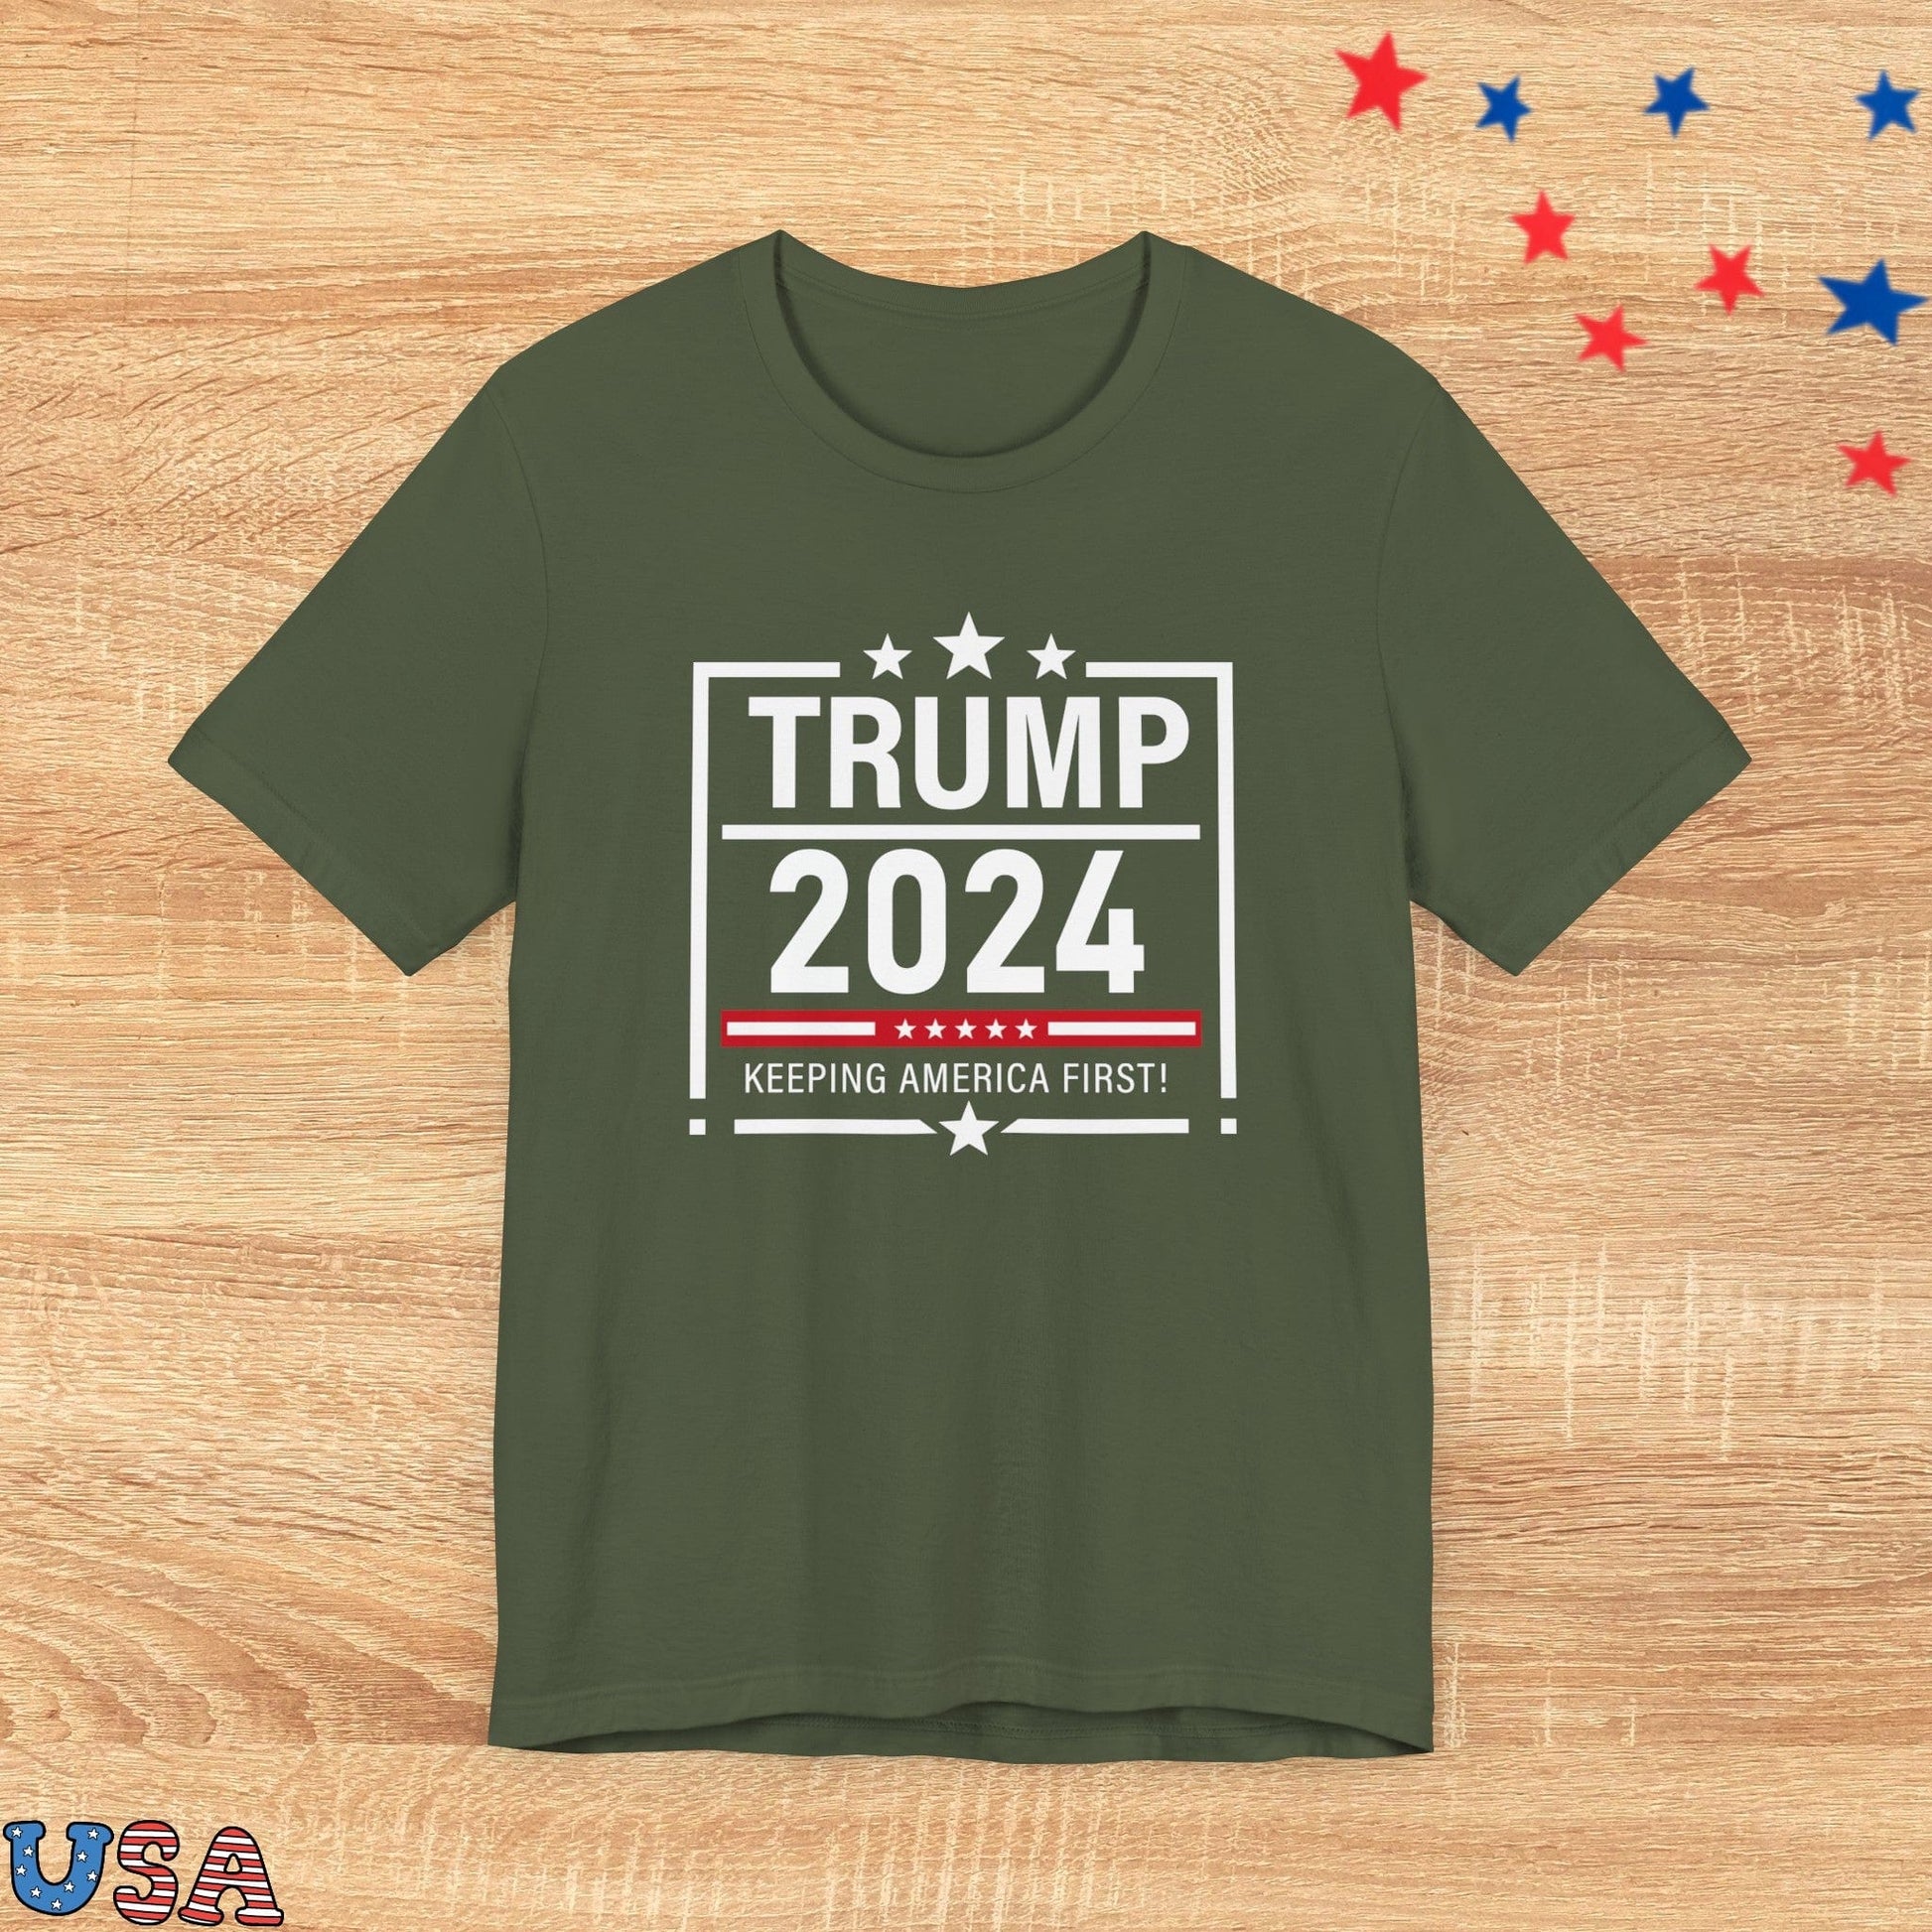 patriotic stars T-Shirt Military Green / XS Keeping America First!